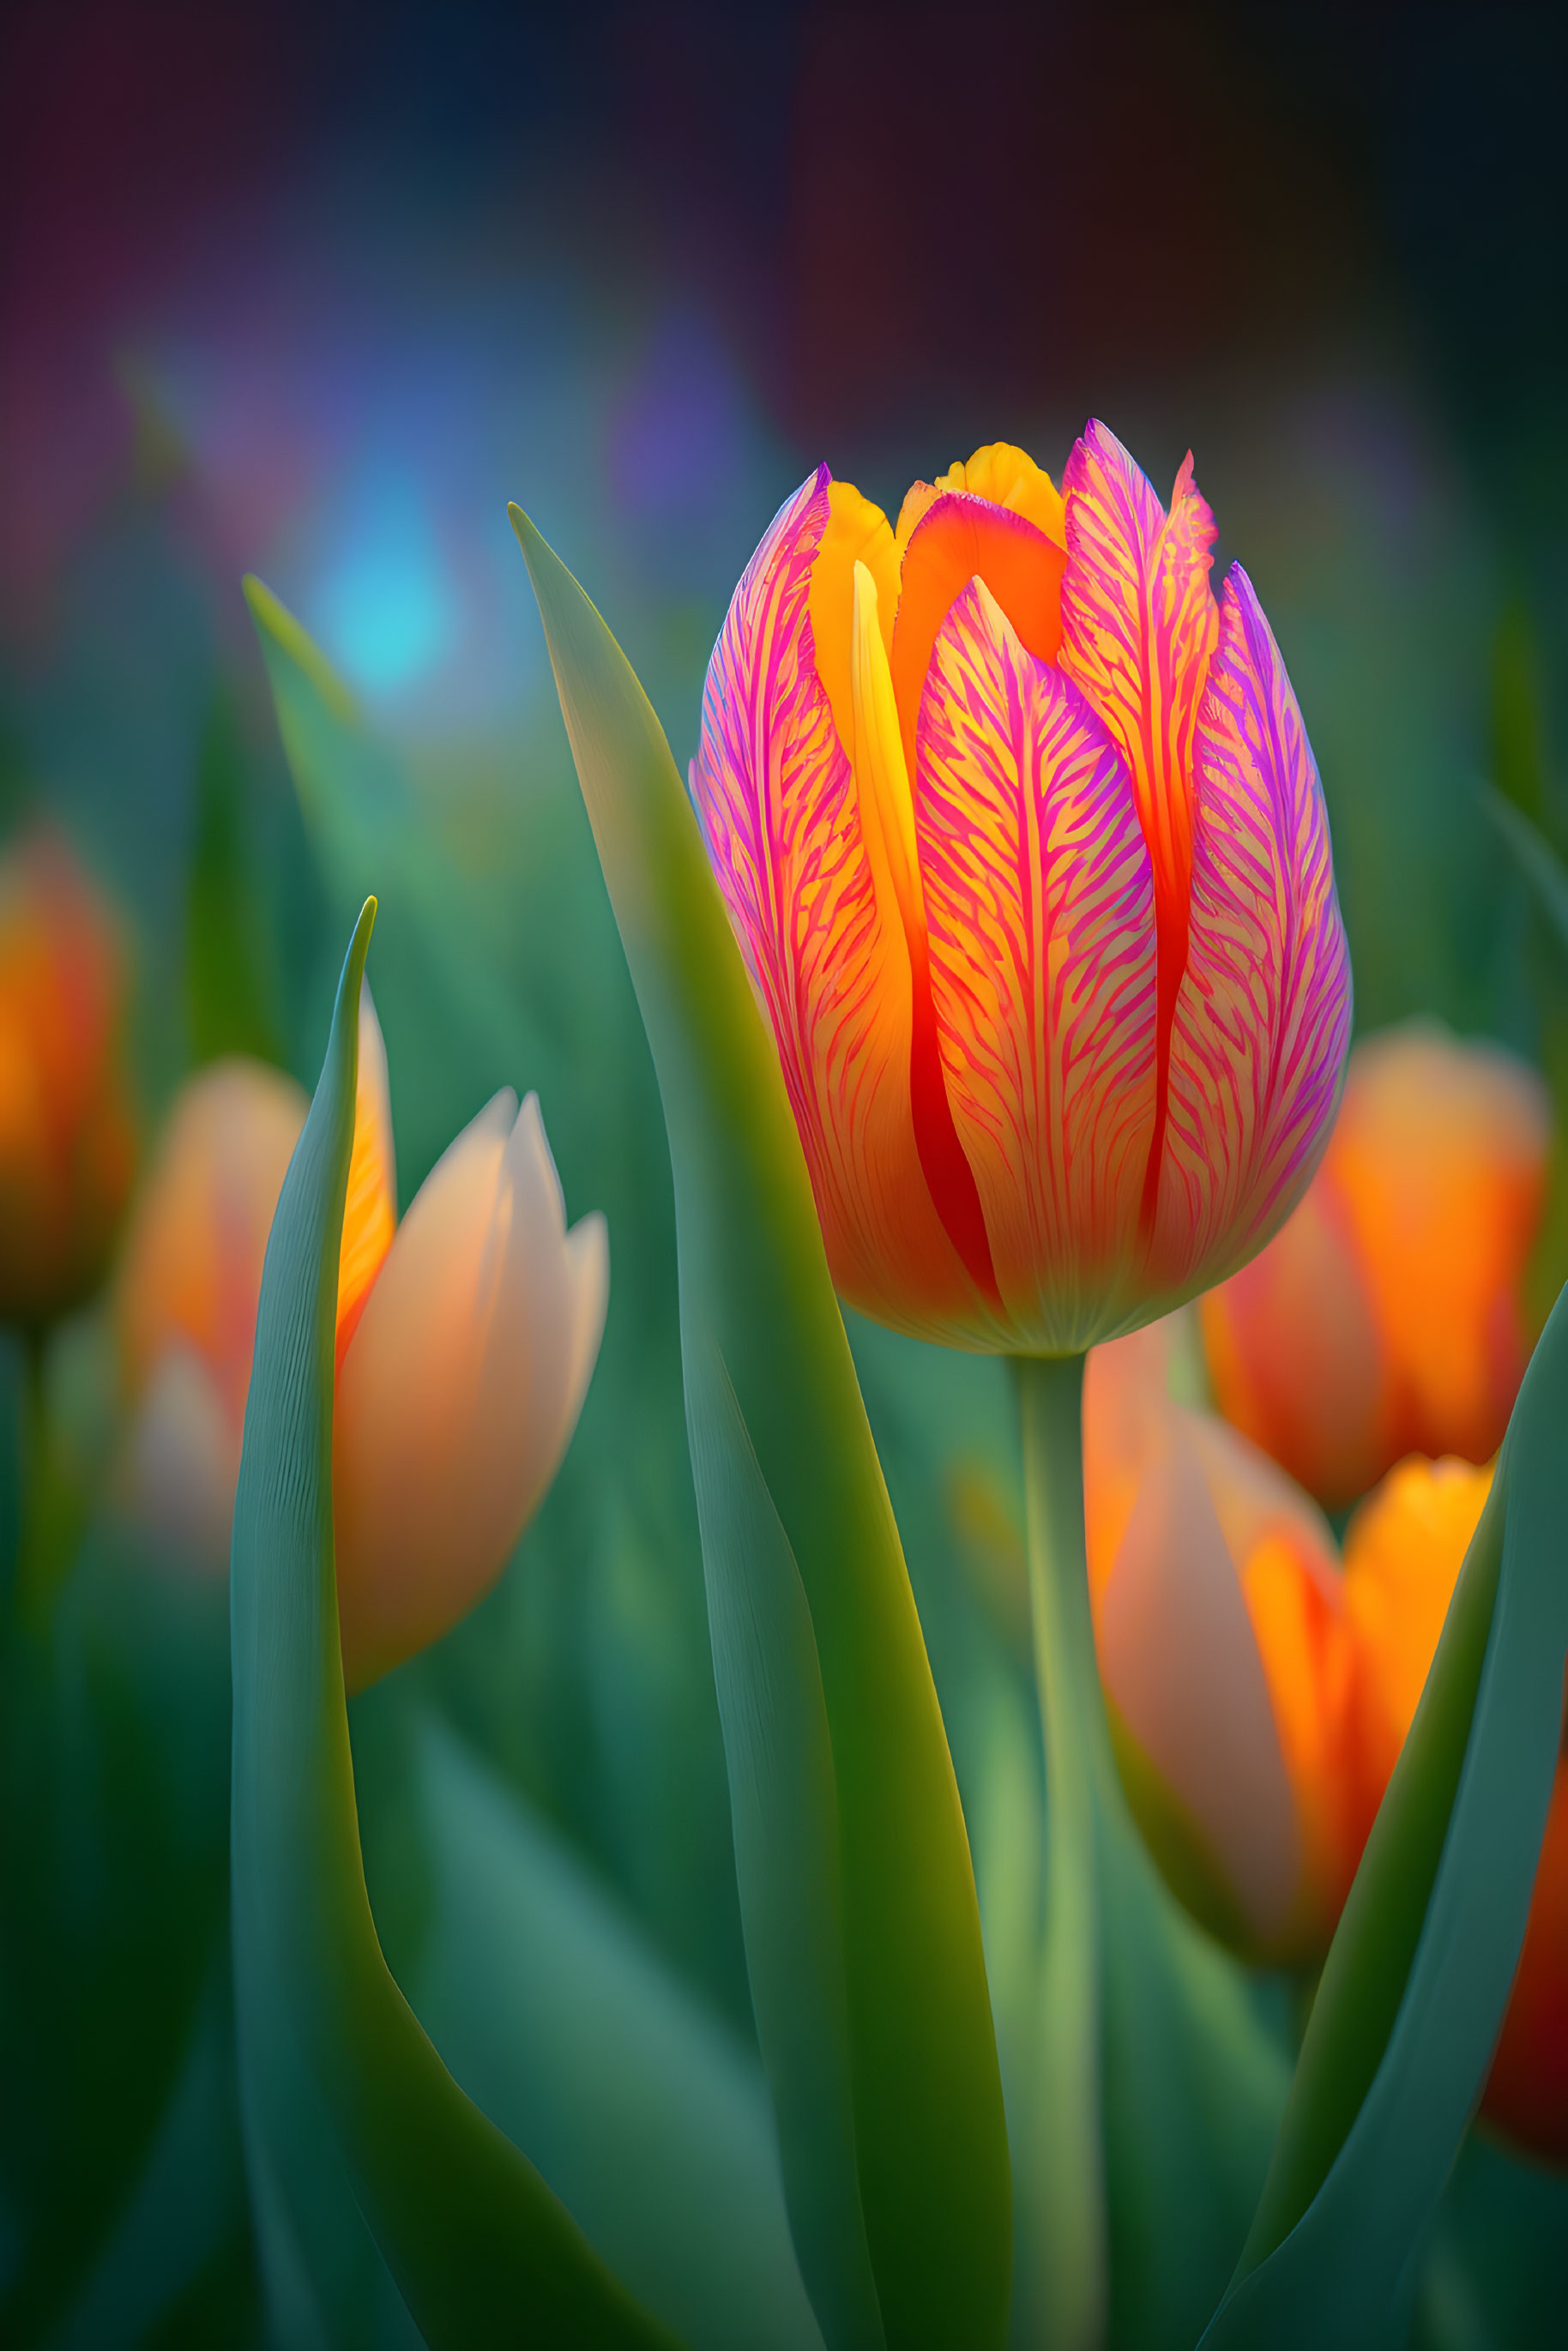 Striped orange and yellow tulip in colorful bokeh setting